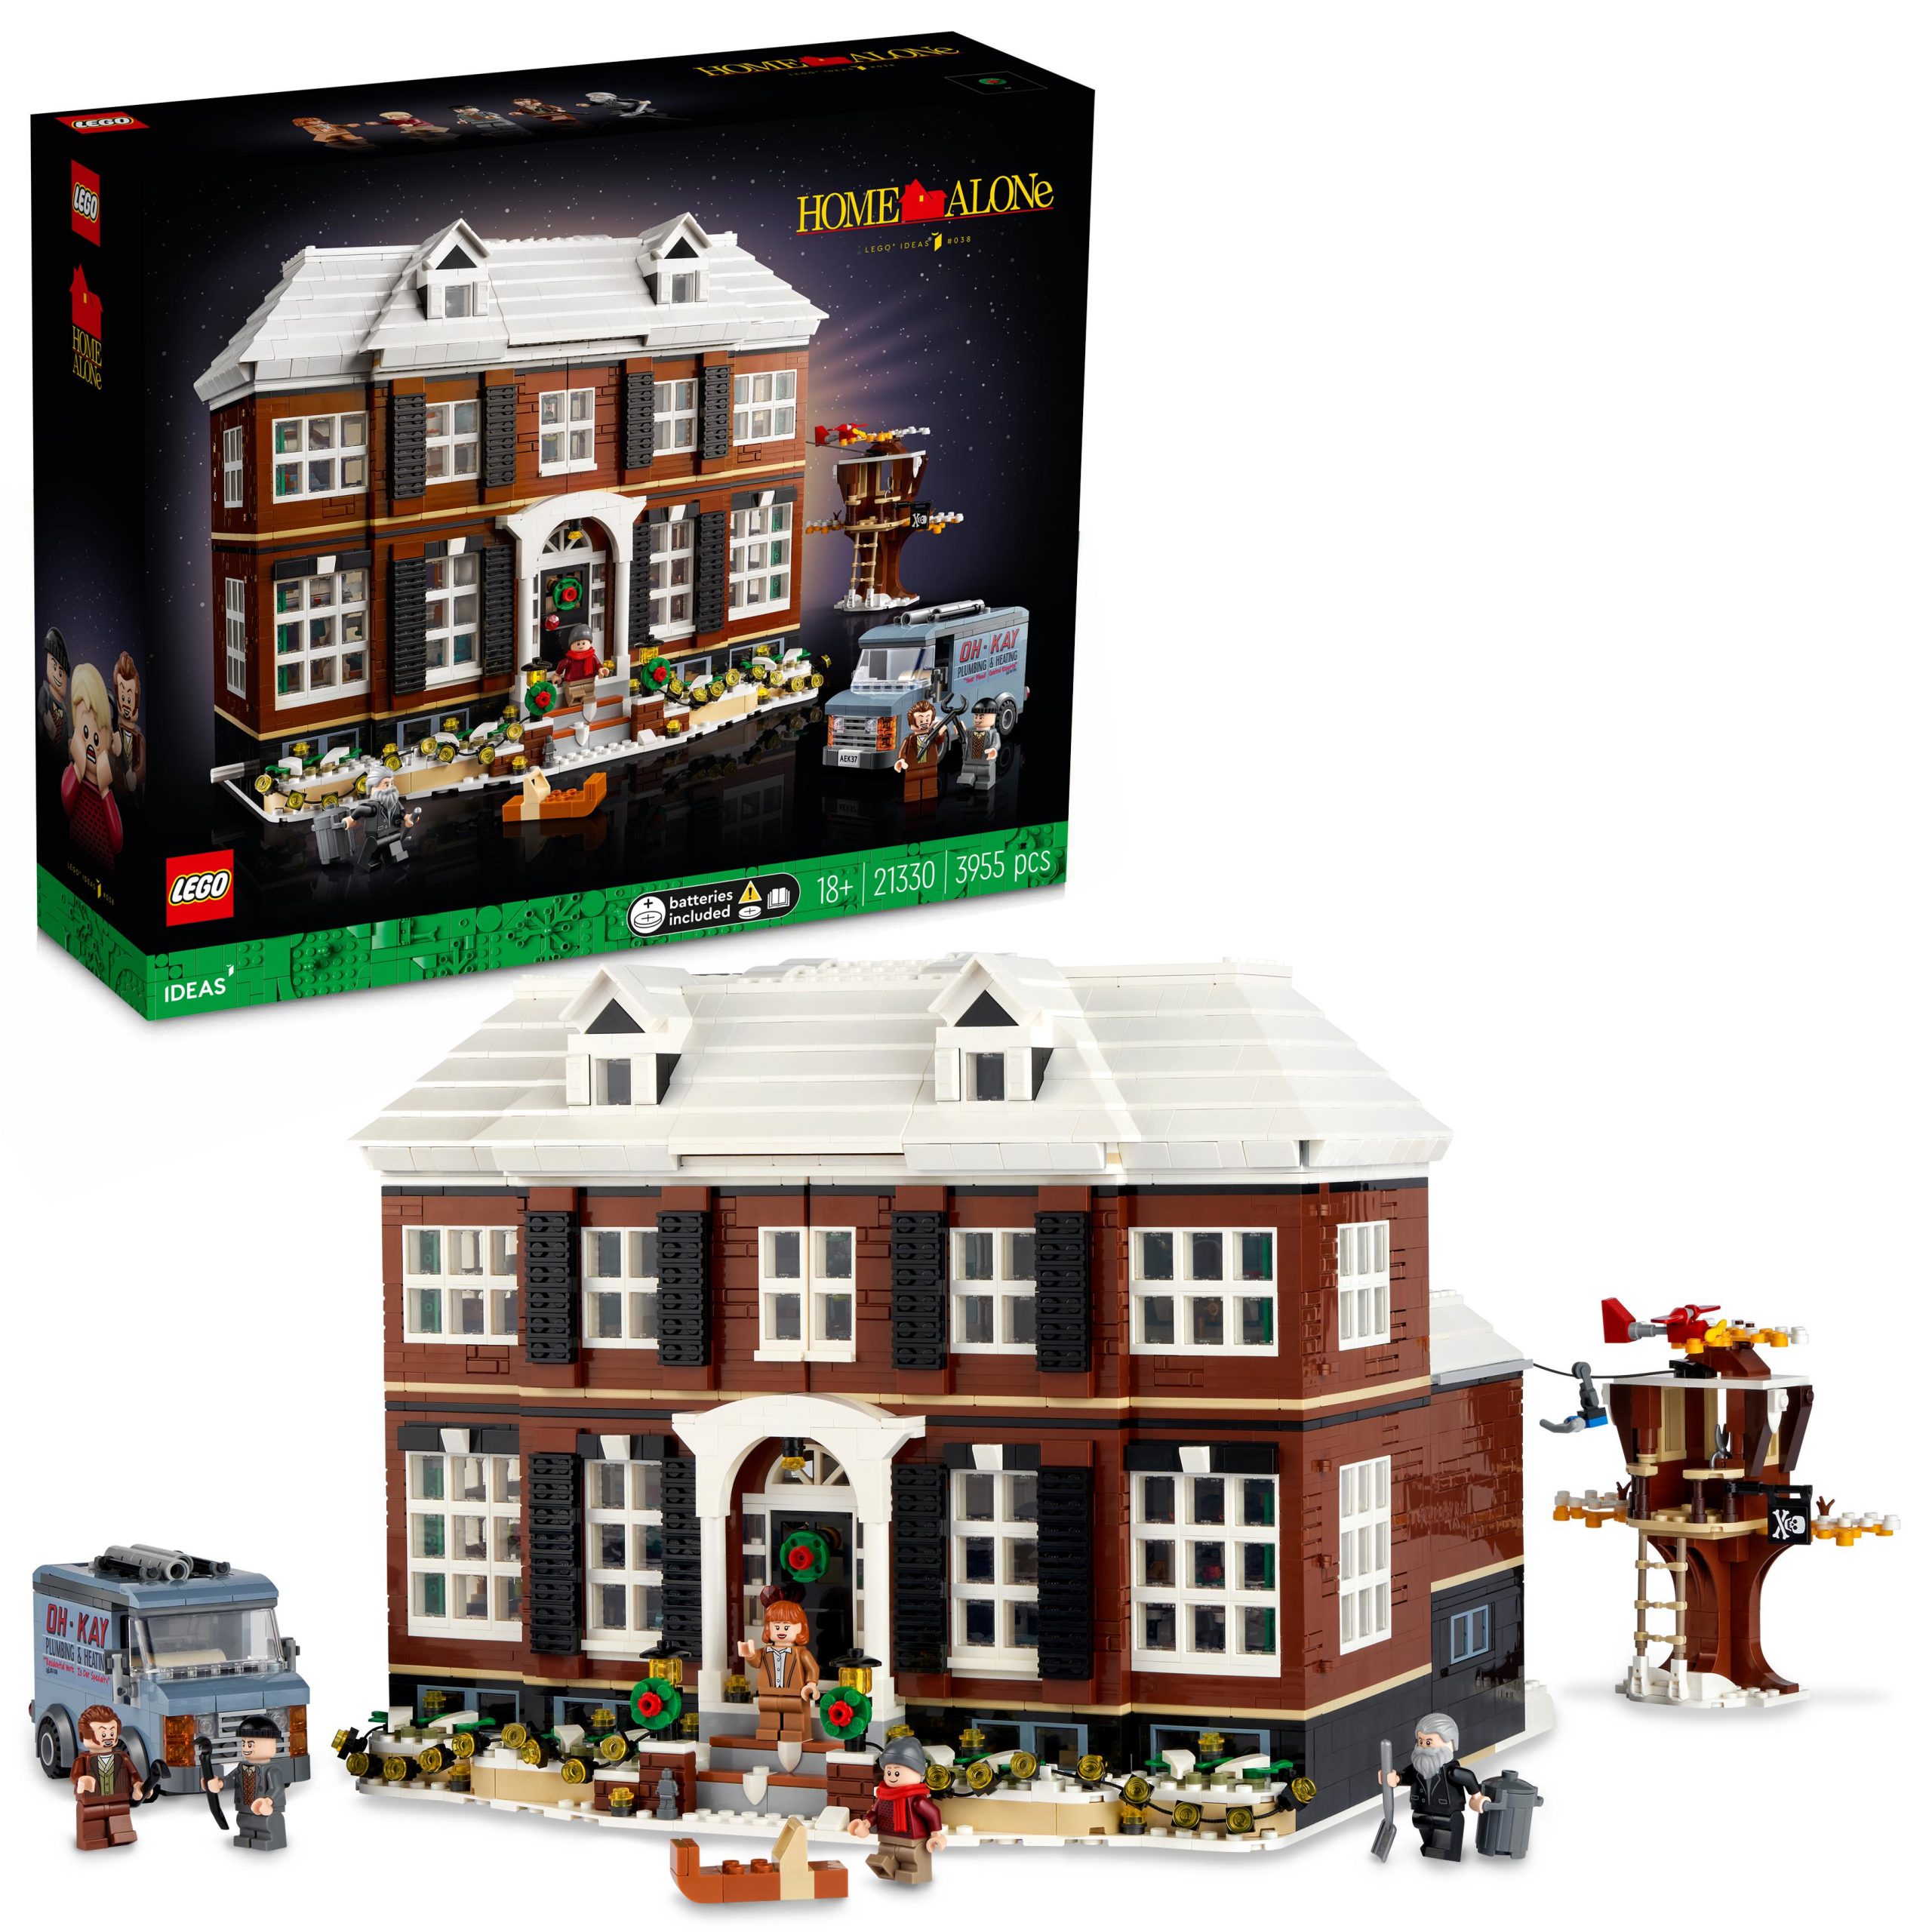 Lego ideas mamma ho perso l'aereo, casa di kevin mccallister, idea regalo con 5 minifigure, set per adulti, 21330 - LEGO IDEAS, Lego